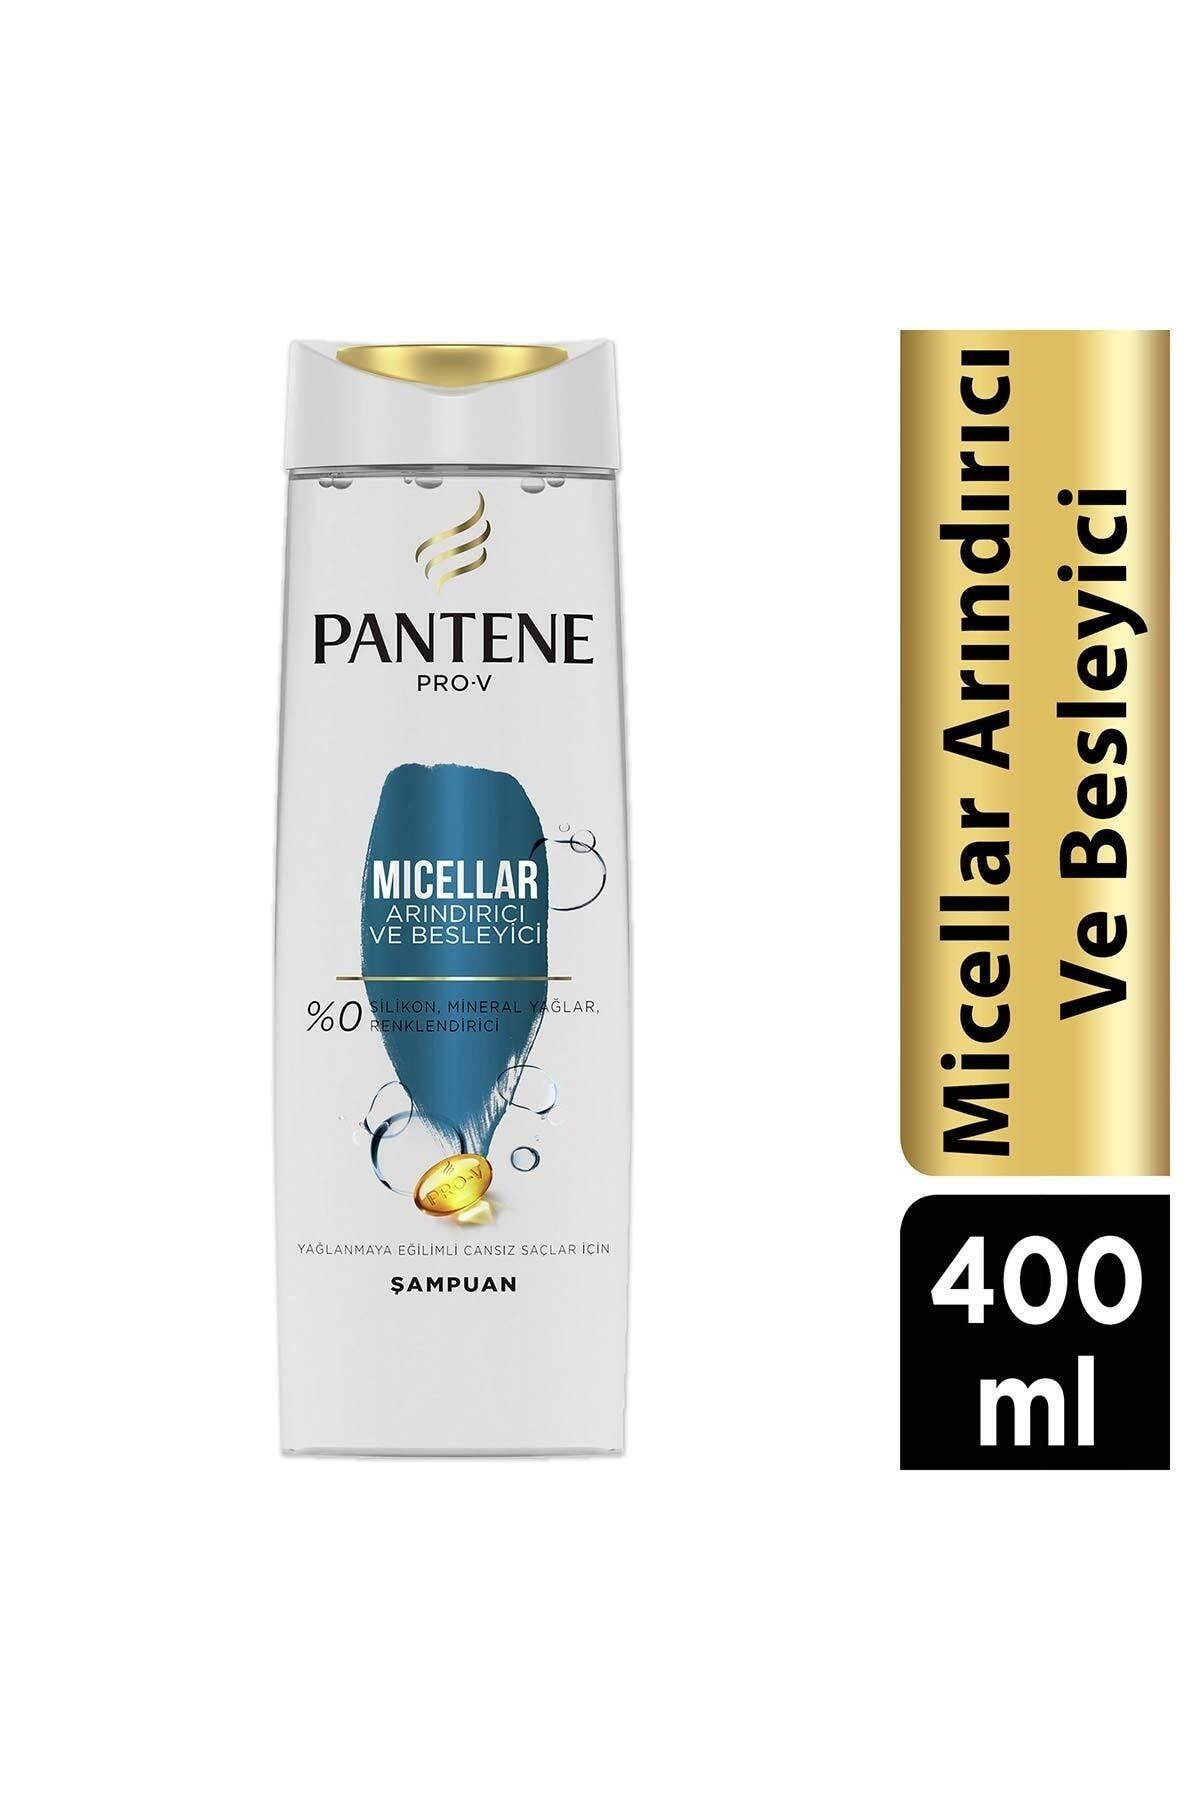 Pantene Pro-v Micellar Temizliği Şampuan 400 ml